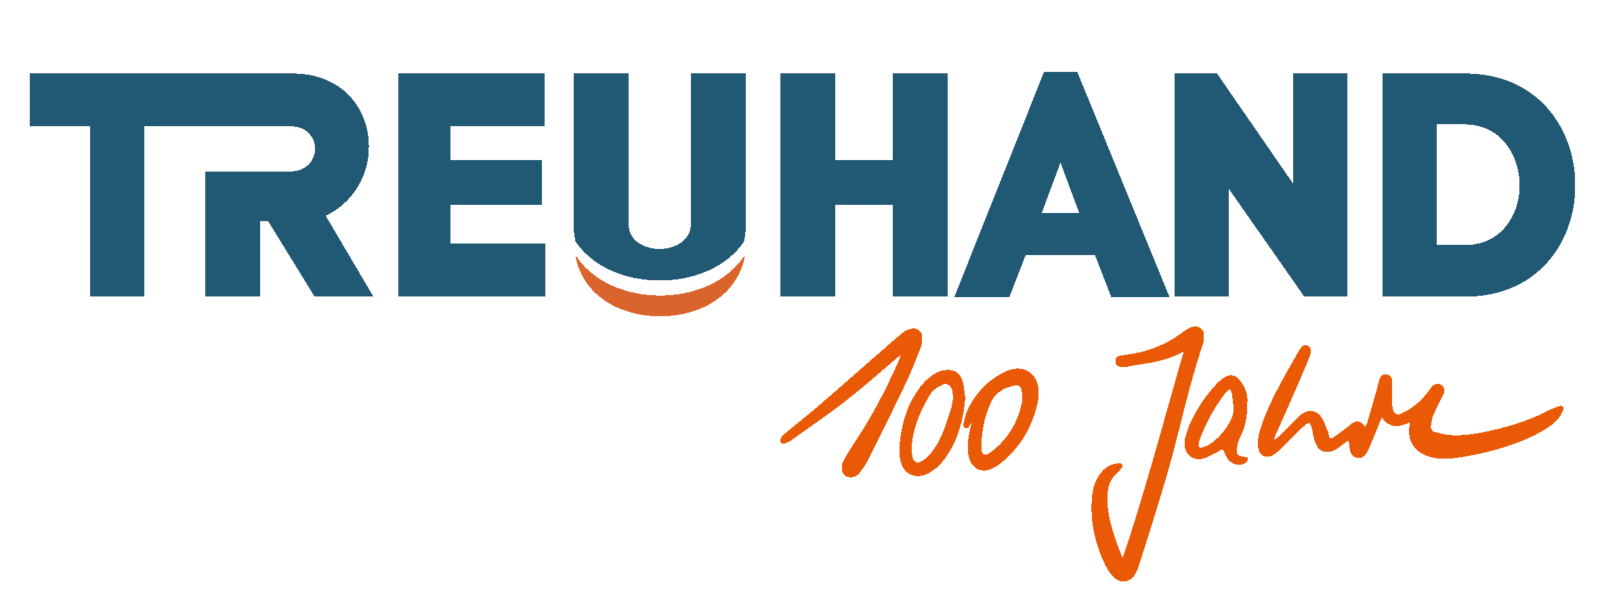 Logo 100 Jahre Treuhand